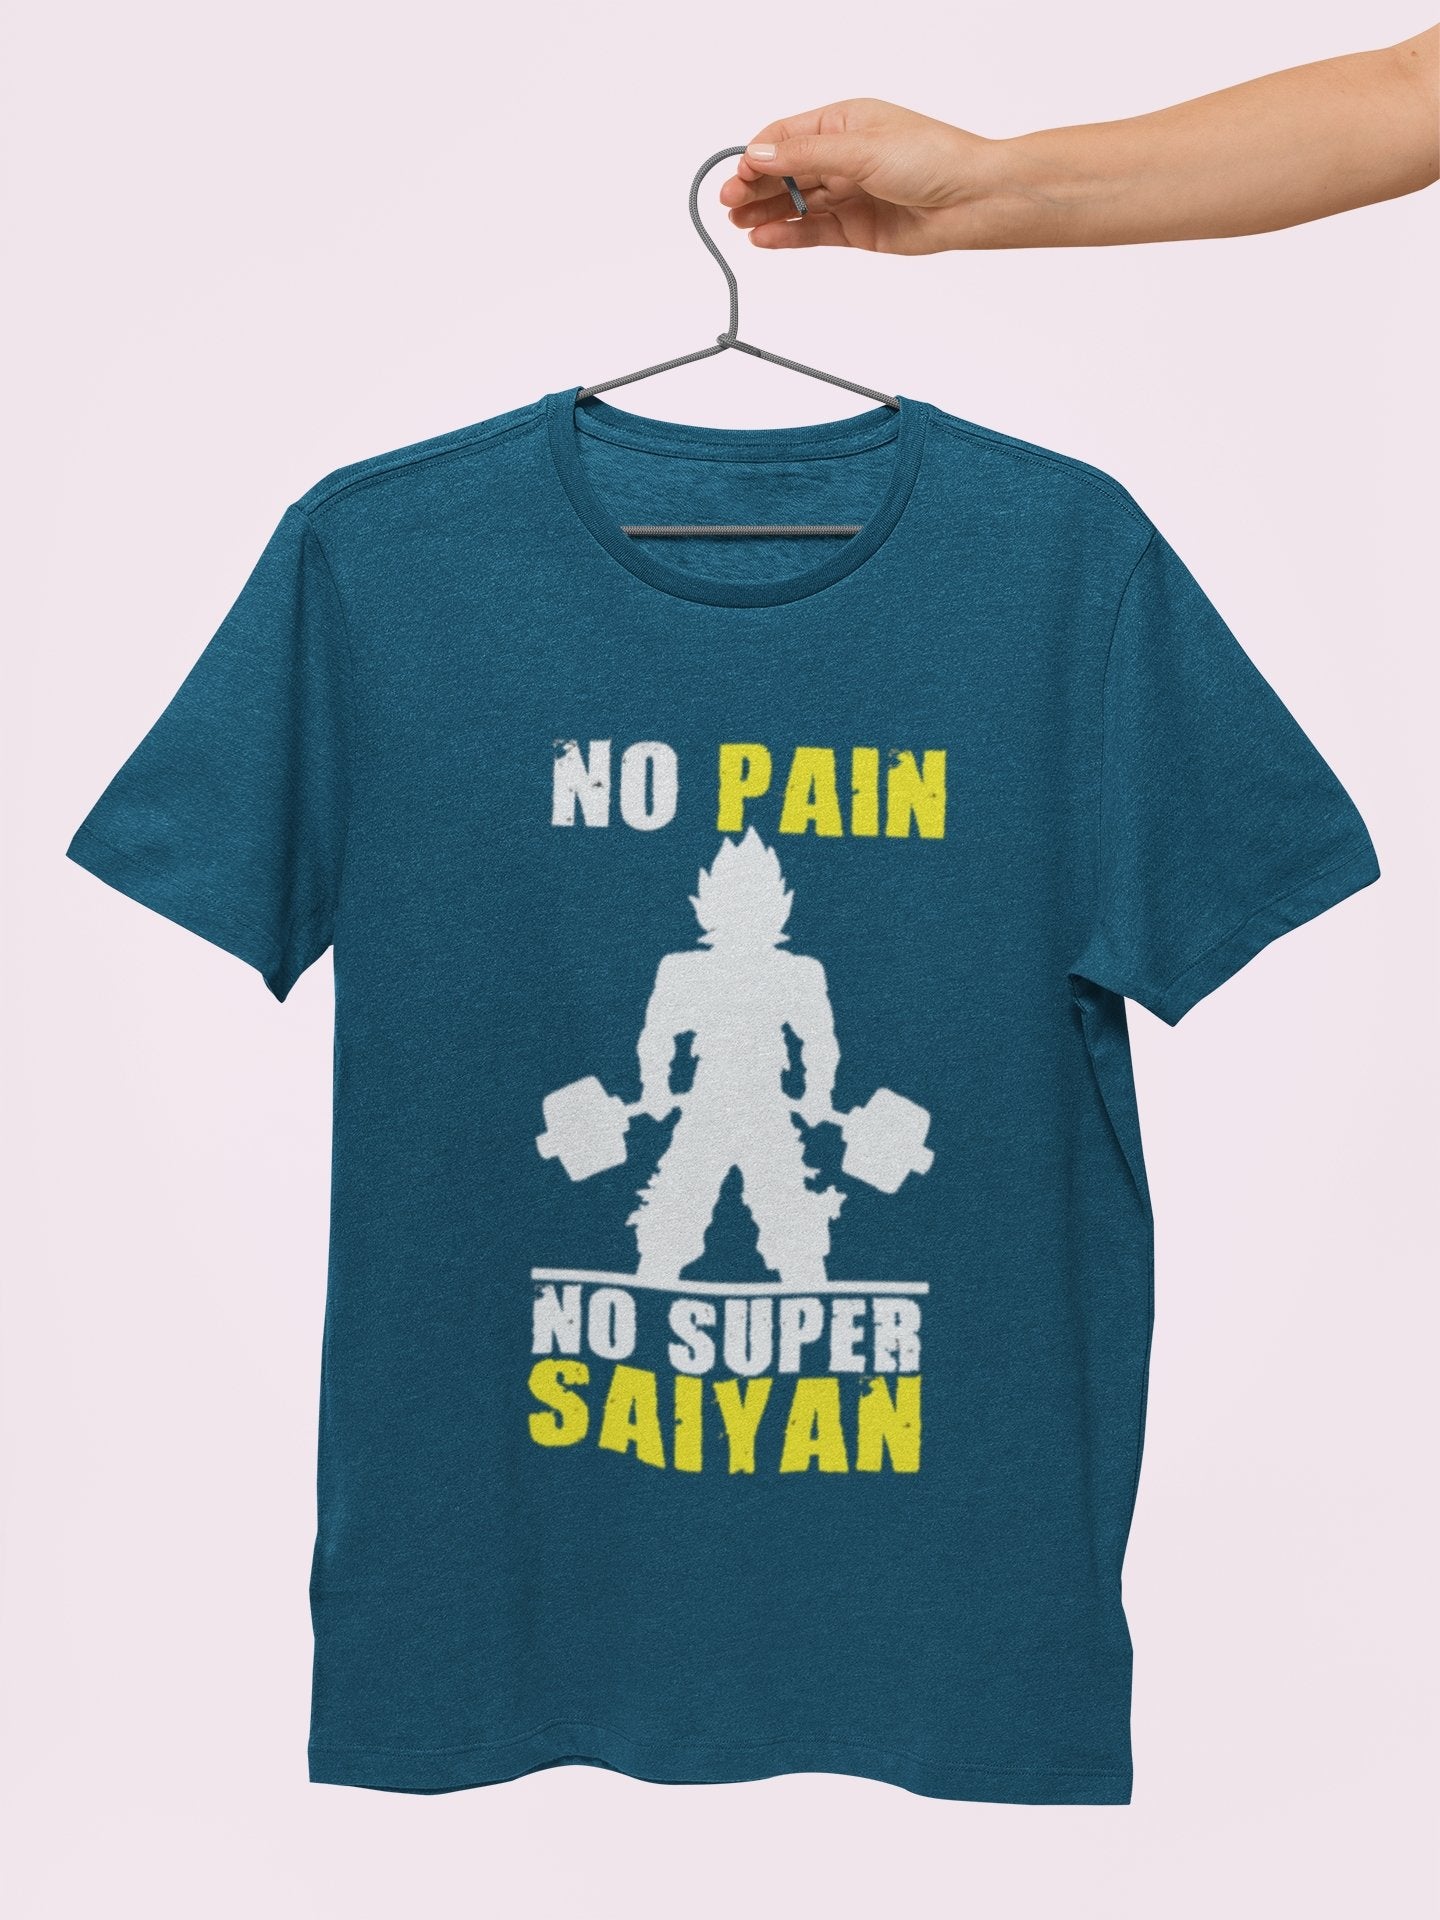 No Pain No Super Saiyan Gym Tee - Insane Tees